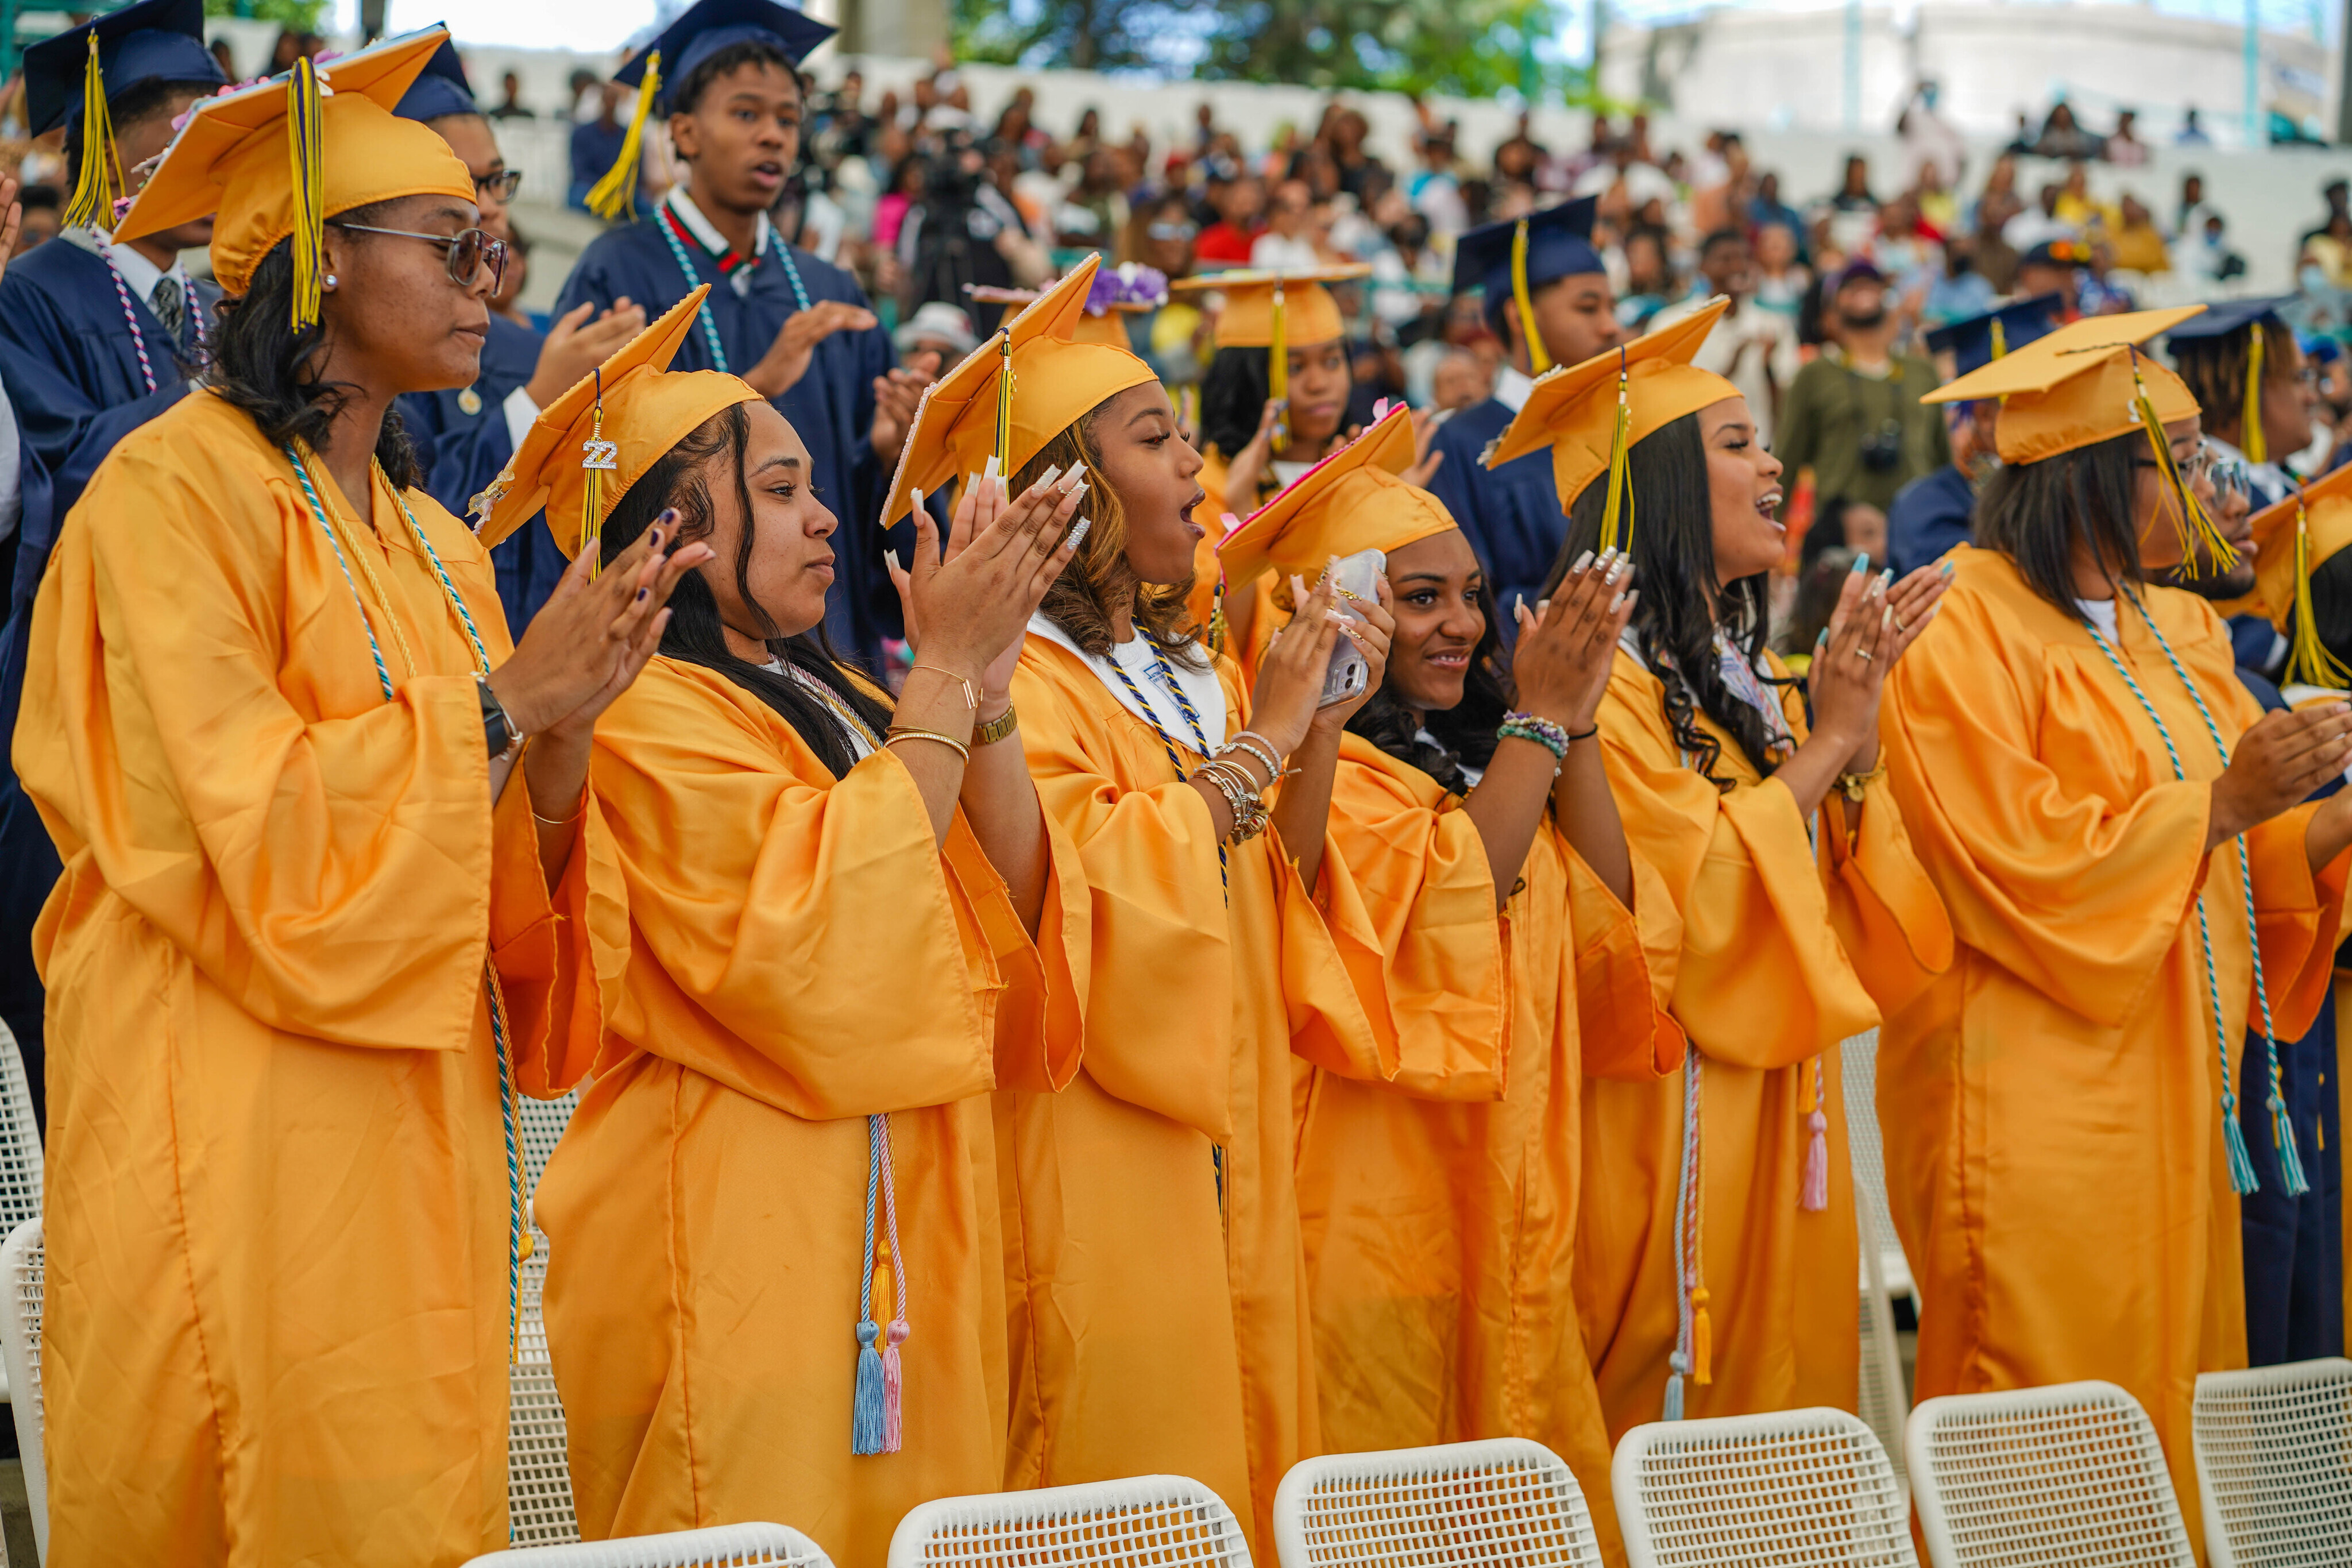 U 2022 Graduation--Graduates cheering for valedictorian speech